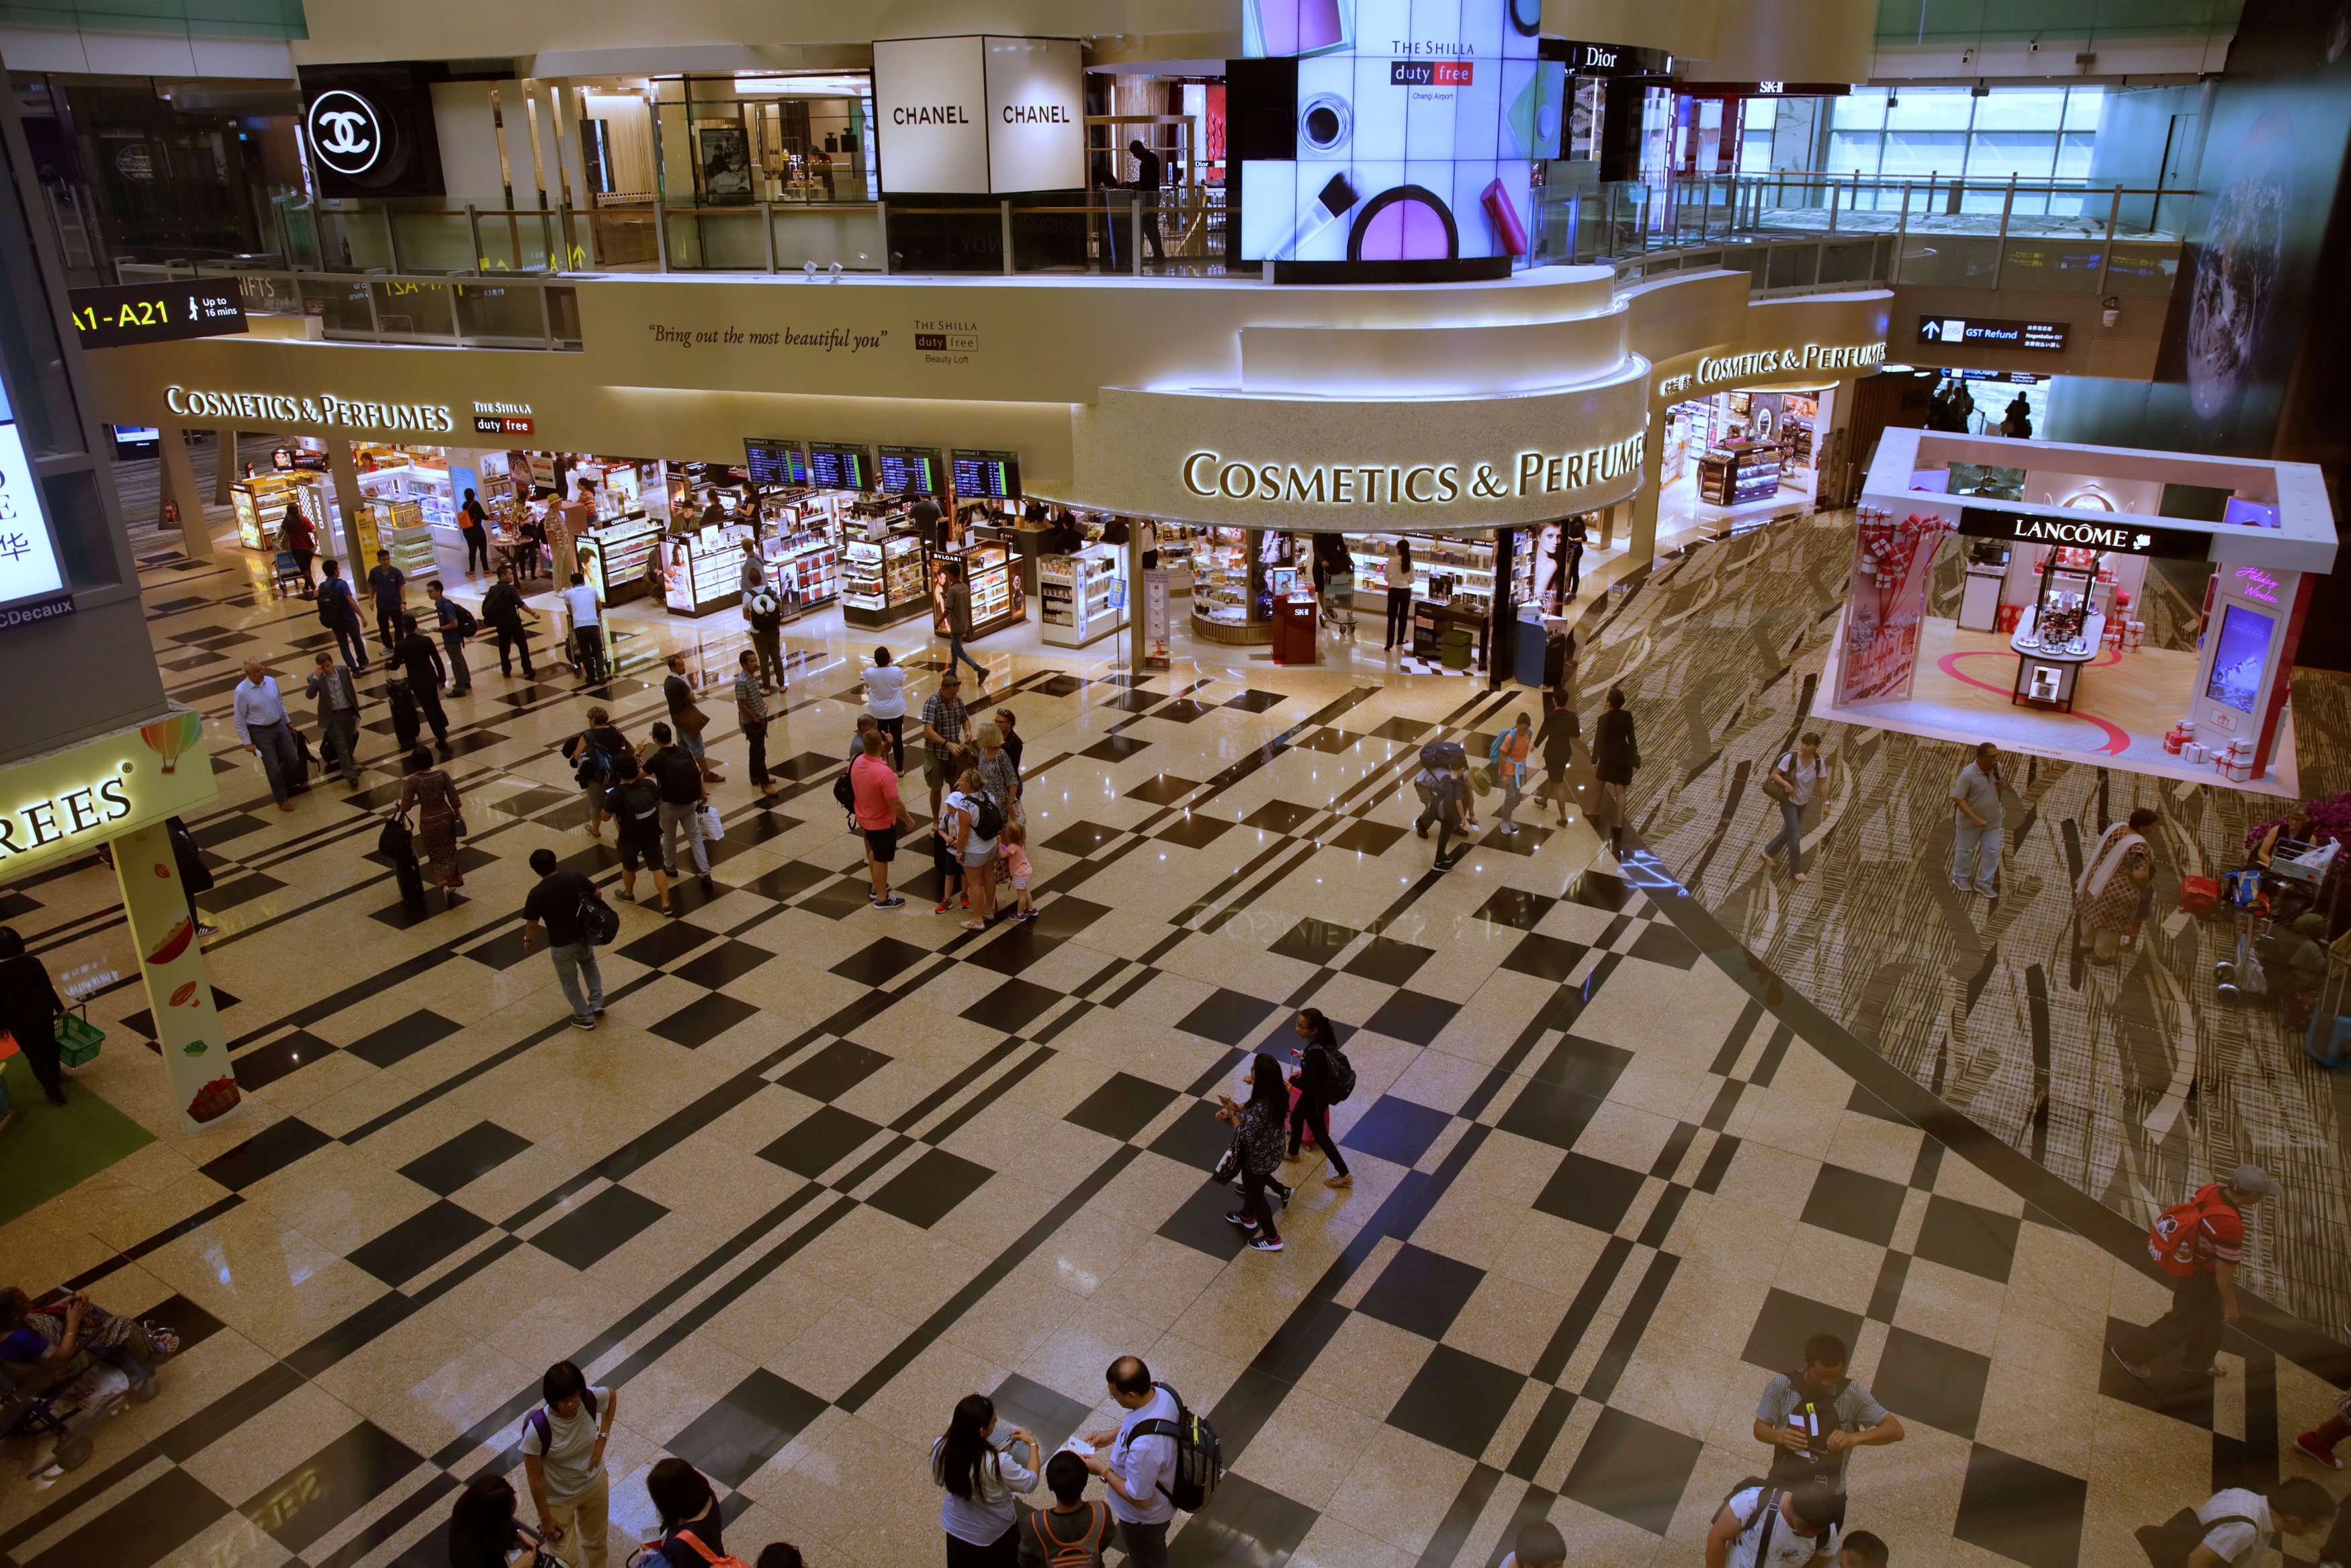 Louis Vuitton Singapore Changi Airport T1 store, Singapore